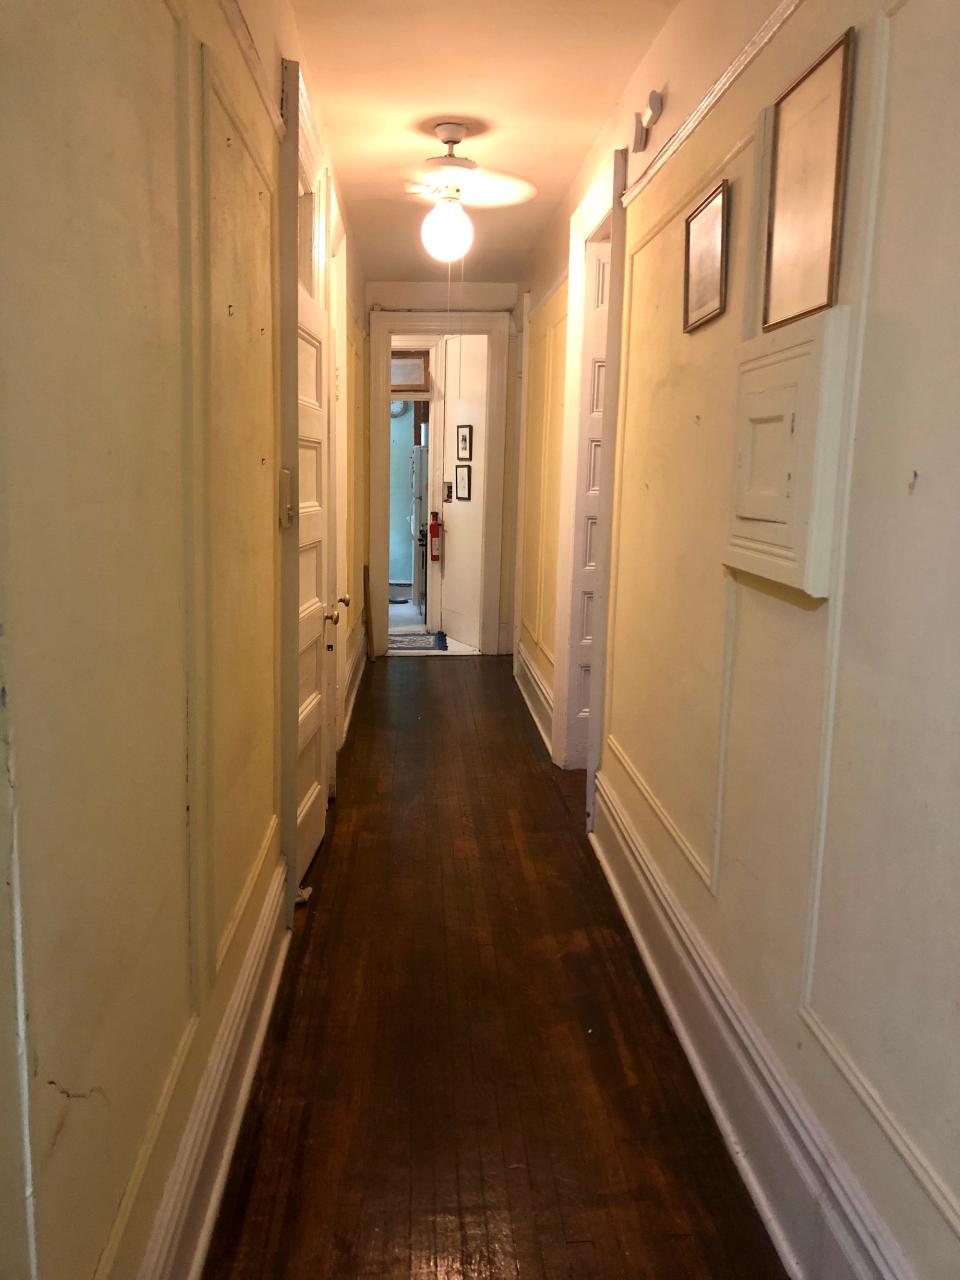 A dark hallway with wood floors.